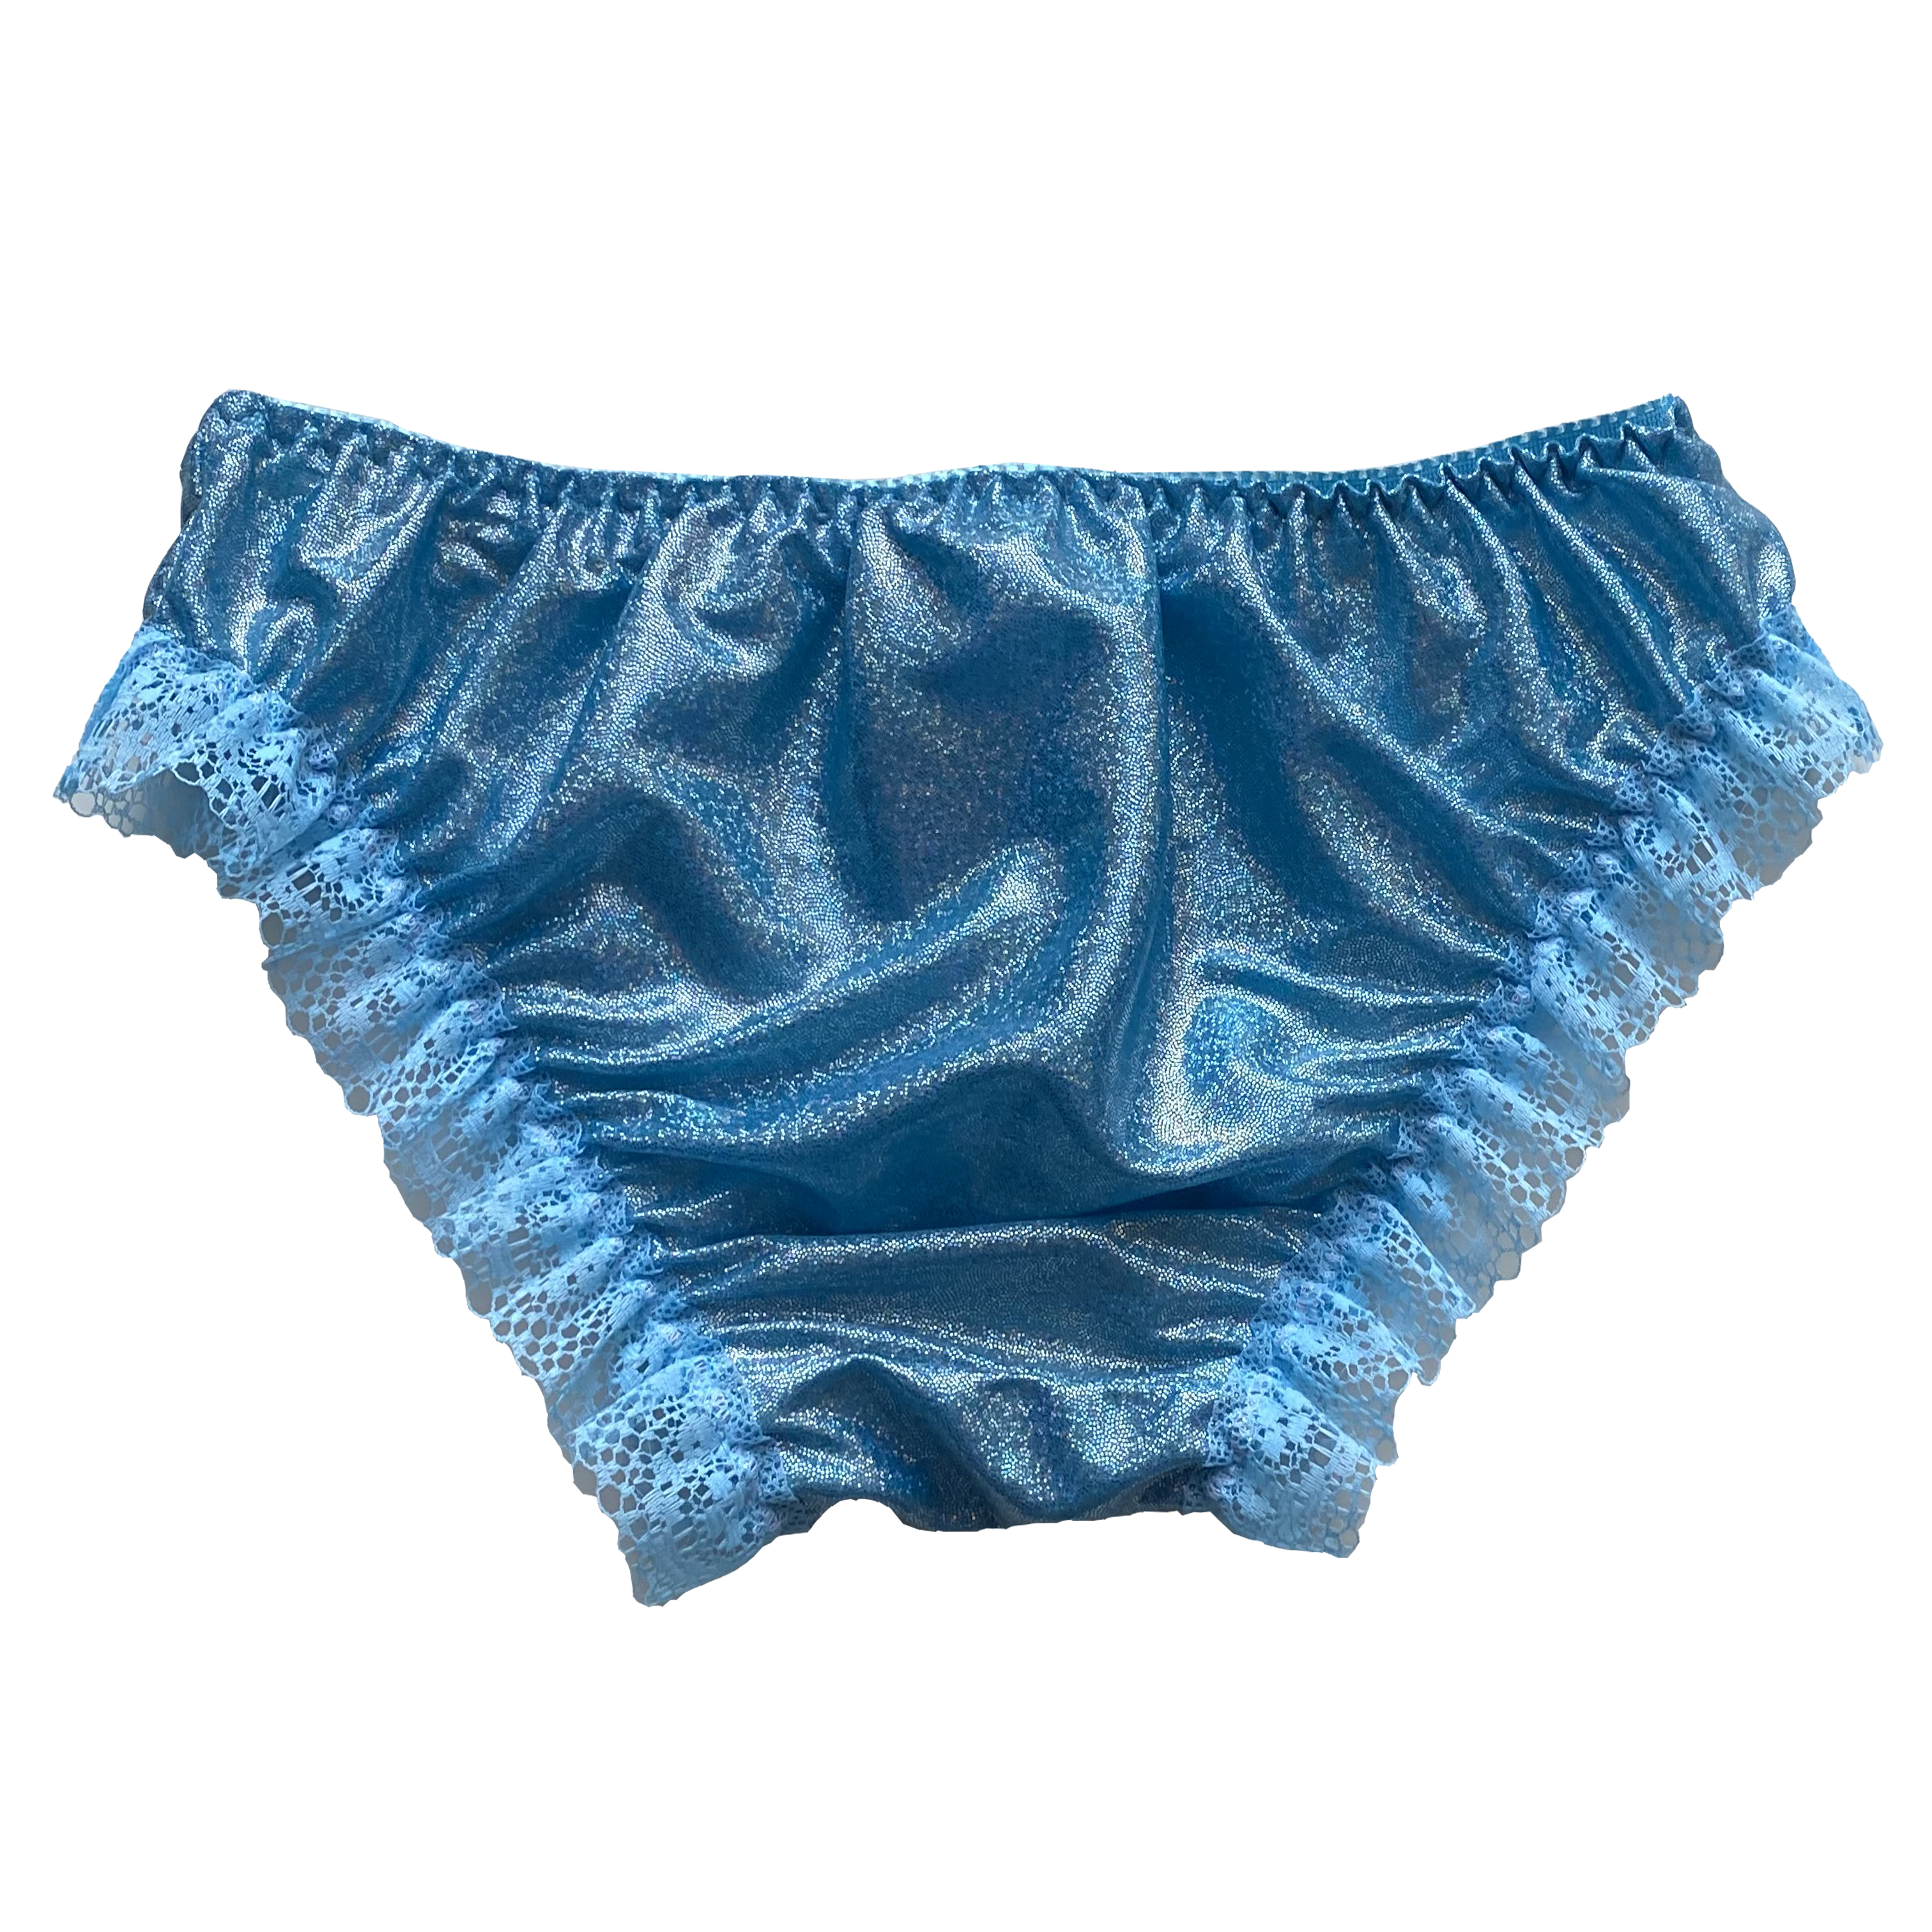 Aqua Shinny Lace Sissy Frilly Full Panties Bikini Knicker Underwear Size 10 20 Ebay 2915